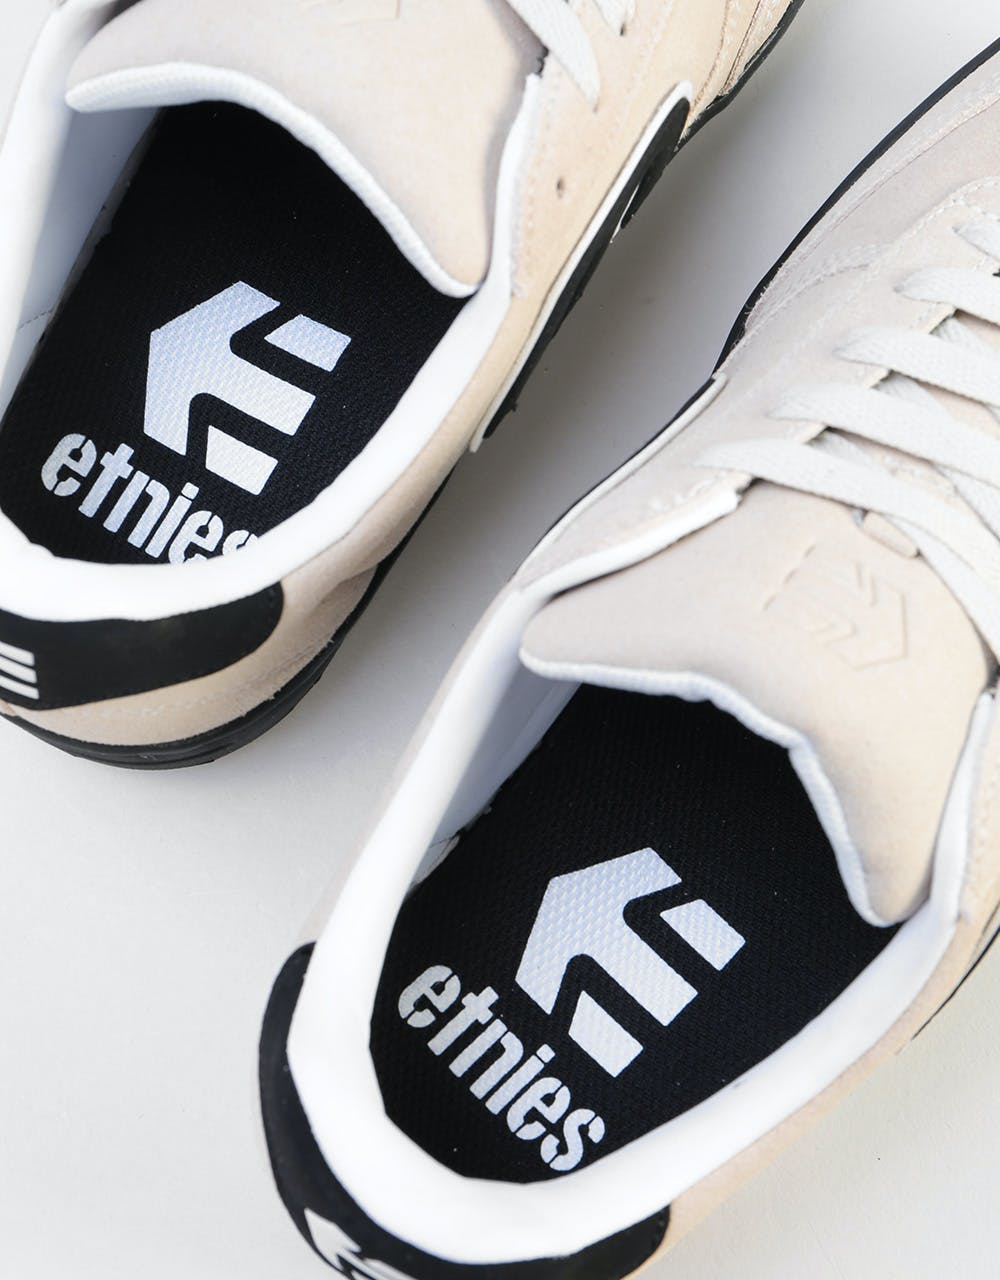 Etnies Lo-Cut Skate Shoes - White/Black